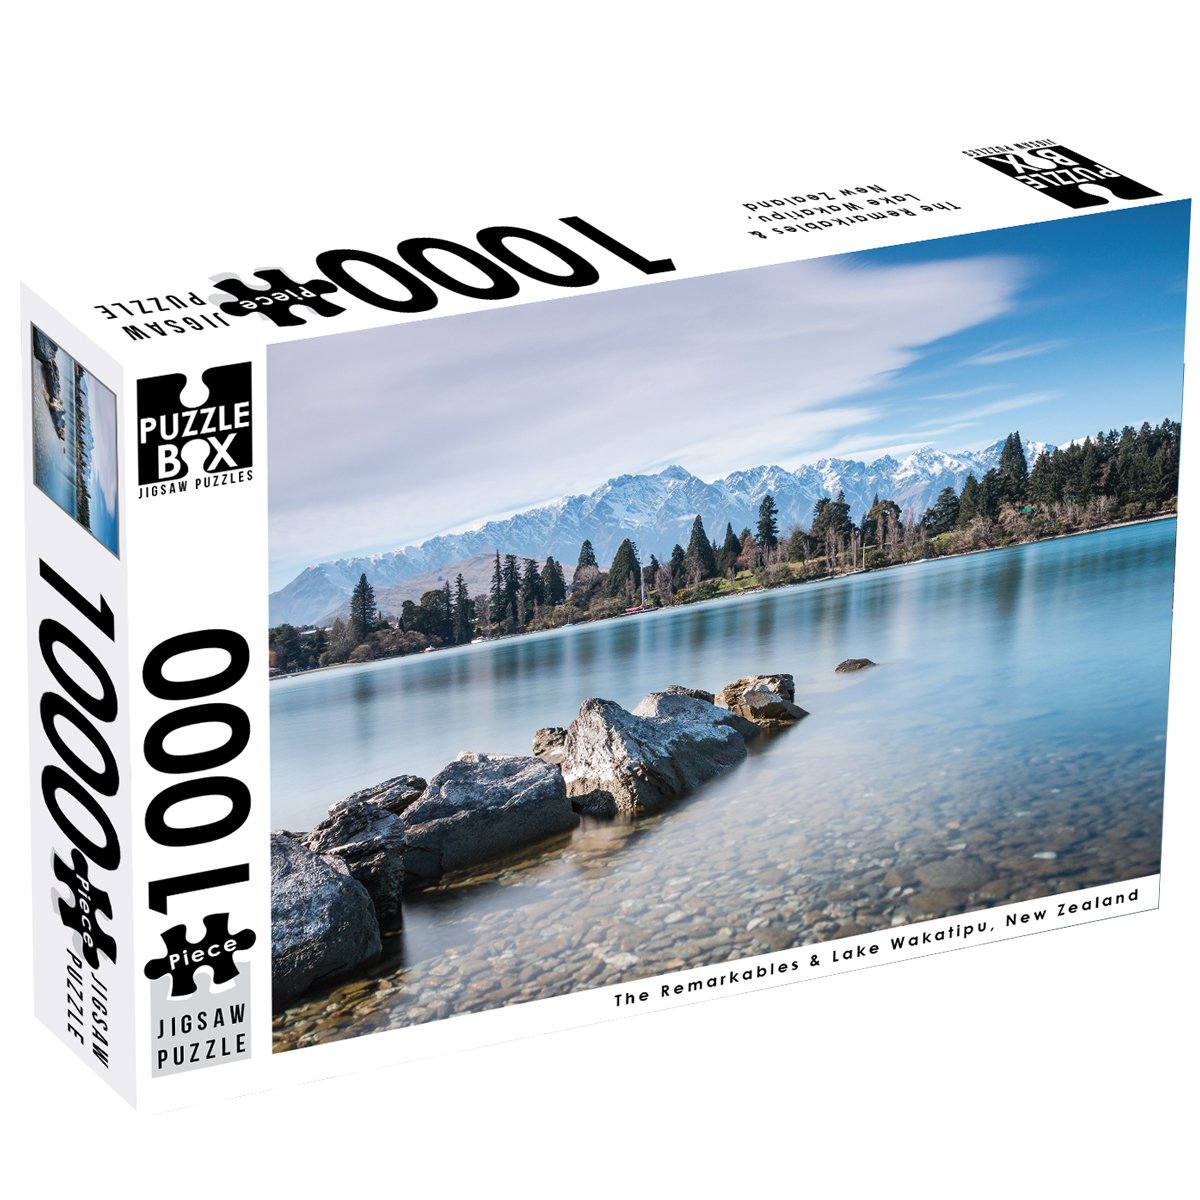 Premium Cut 1000pc Puzzle: Remarkables & Lake Wakatipu The Toy Wagon